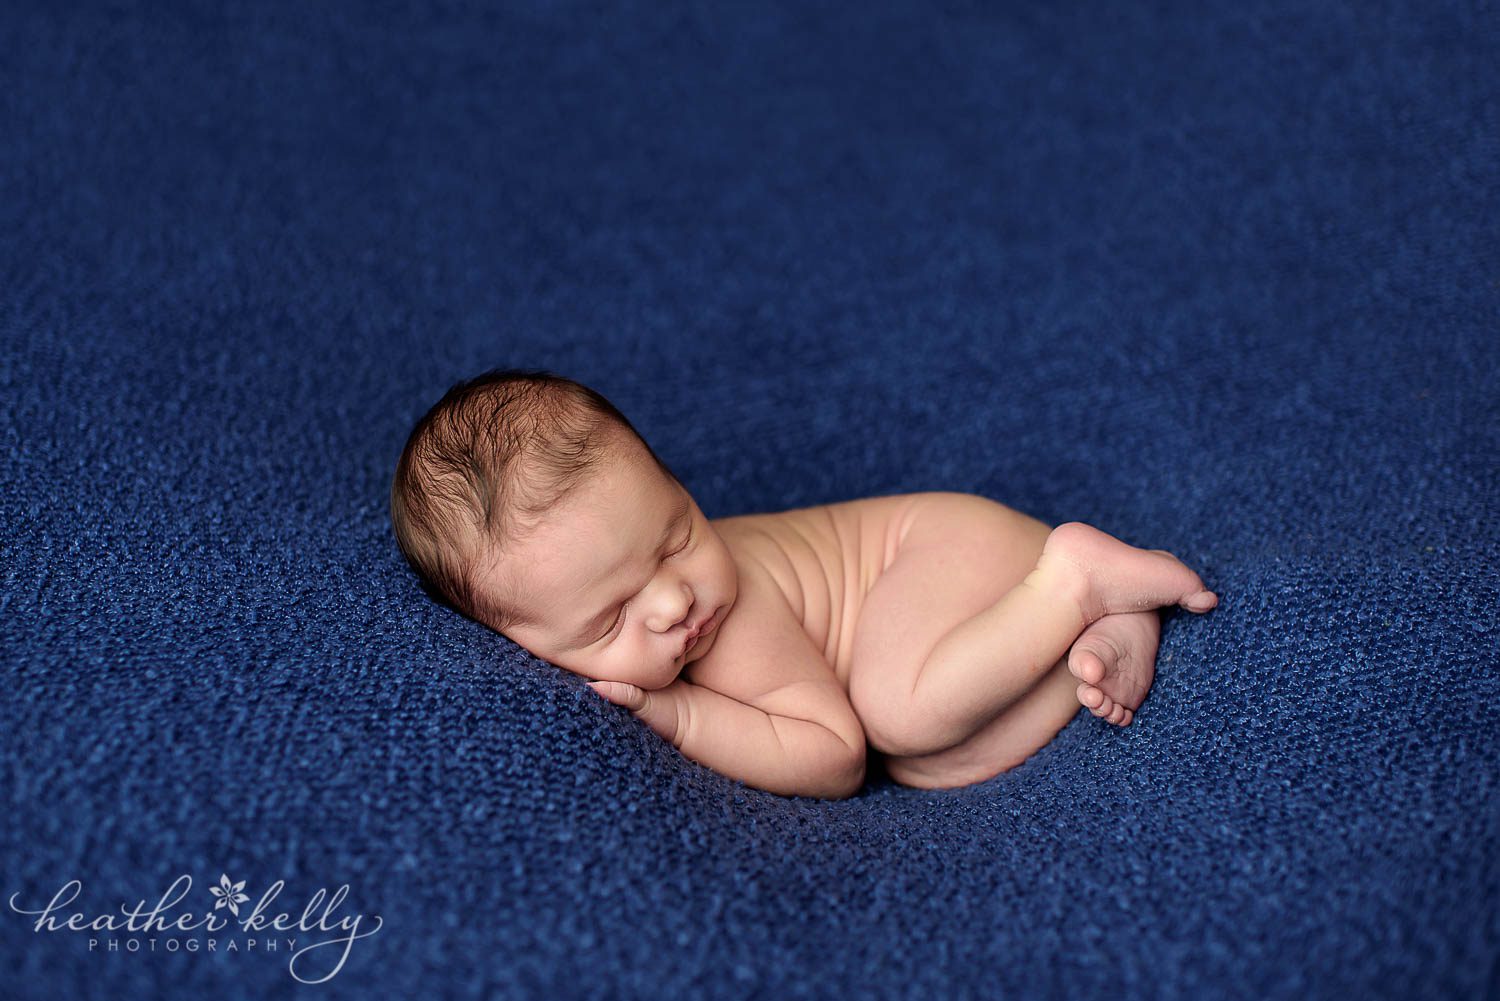 snuggle pose. newborn photography poses. navy baby boy